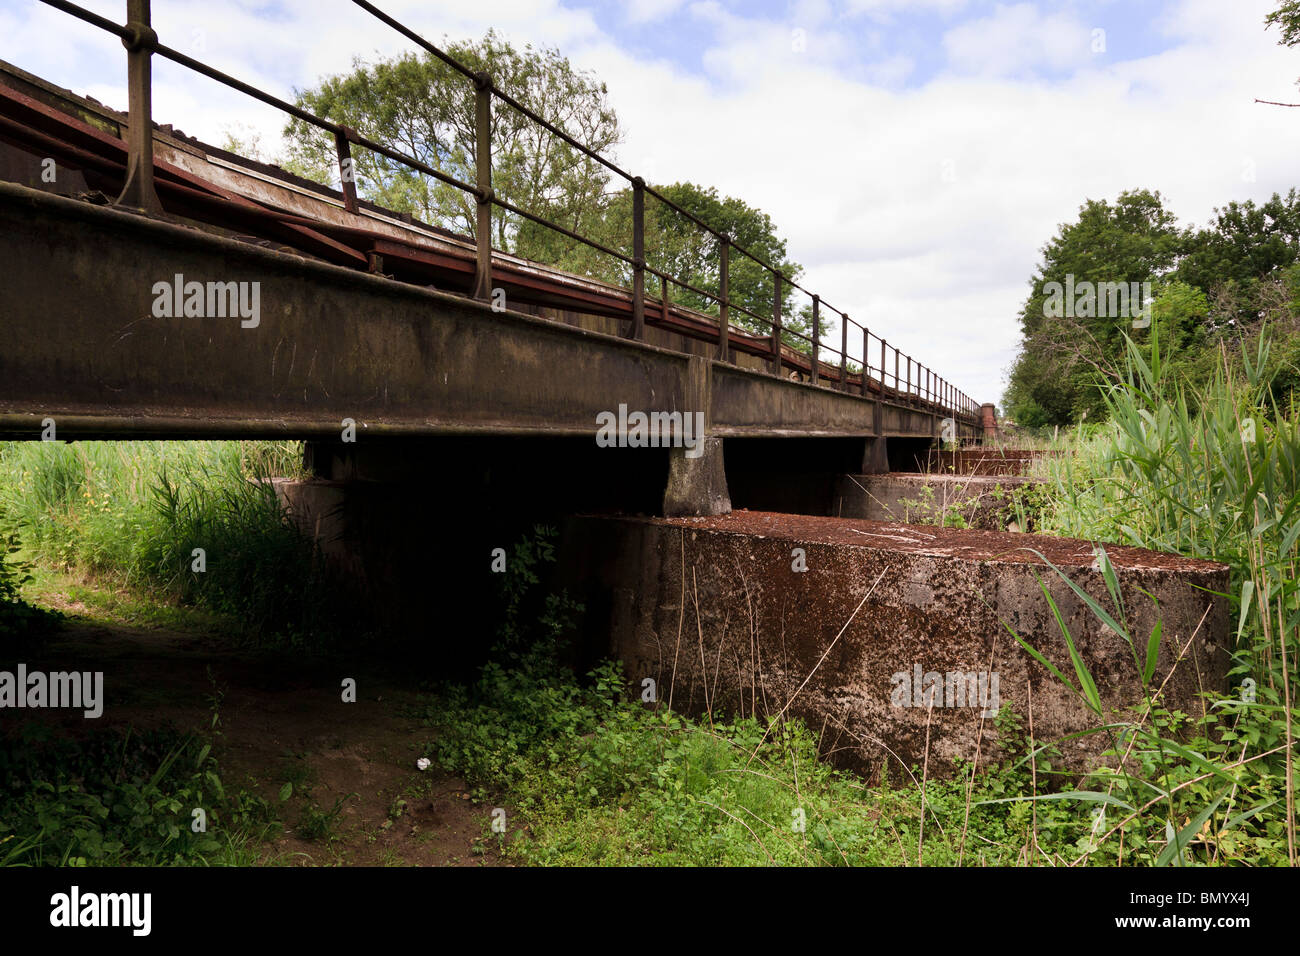 elevated railway bridge crossing countryside field Stock Photo